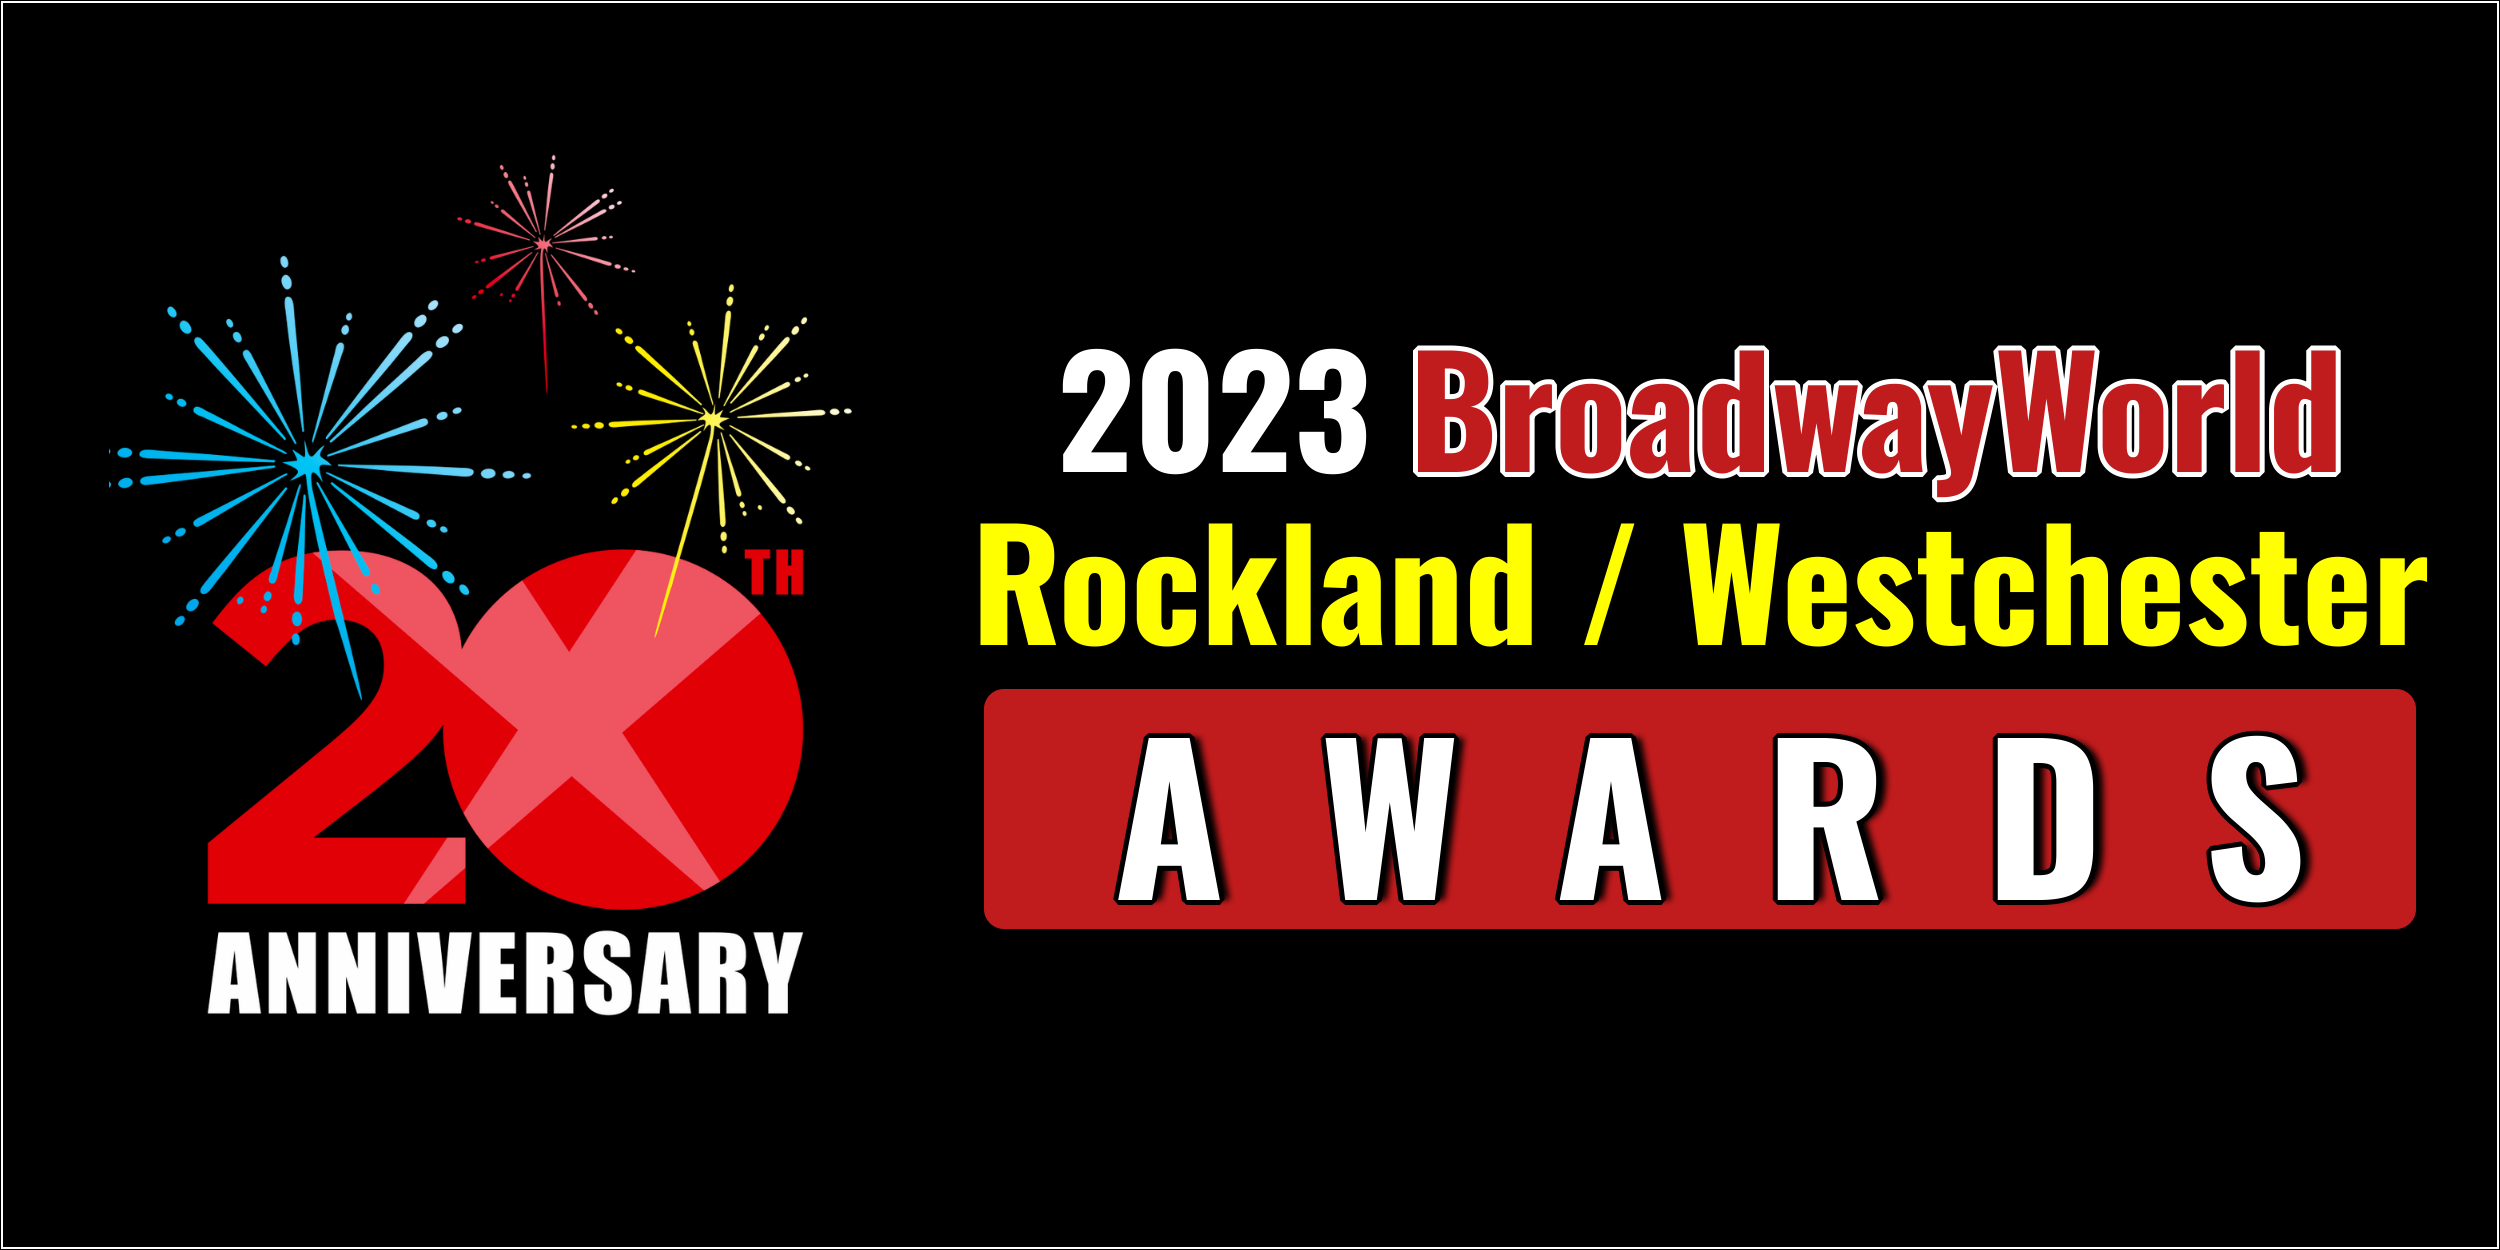 BroadwayWorld Rockland / Westchester Awards December 5th Standings; SEUSSICAL Leads Best Musical! 